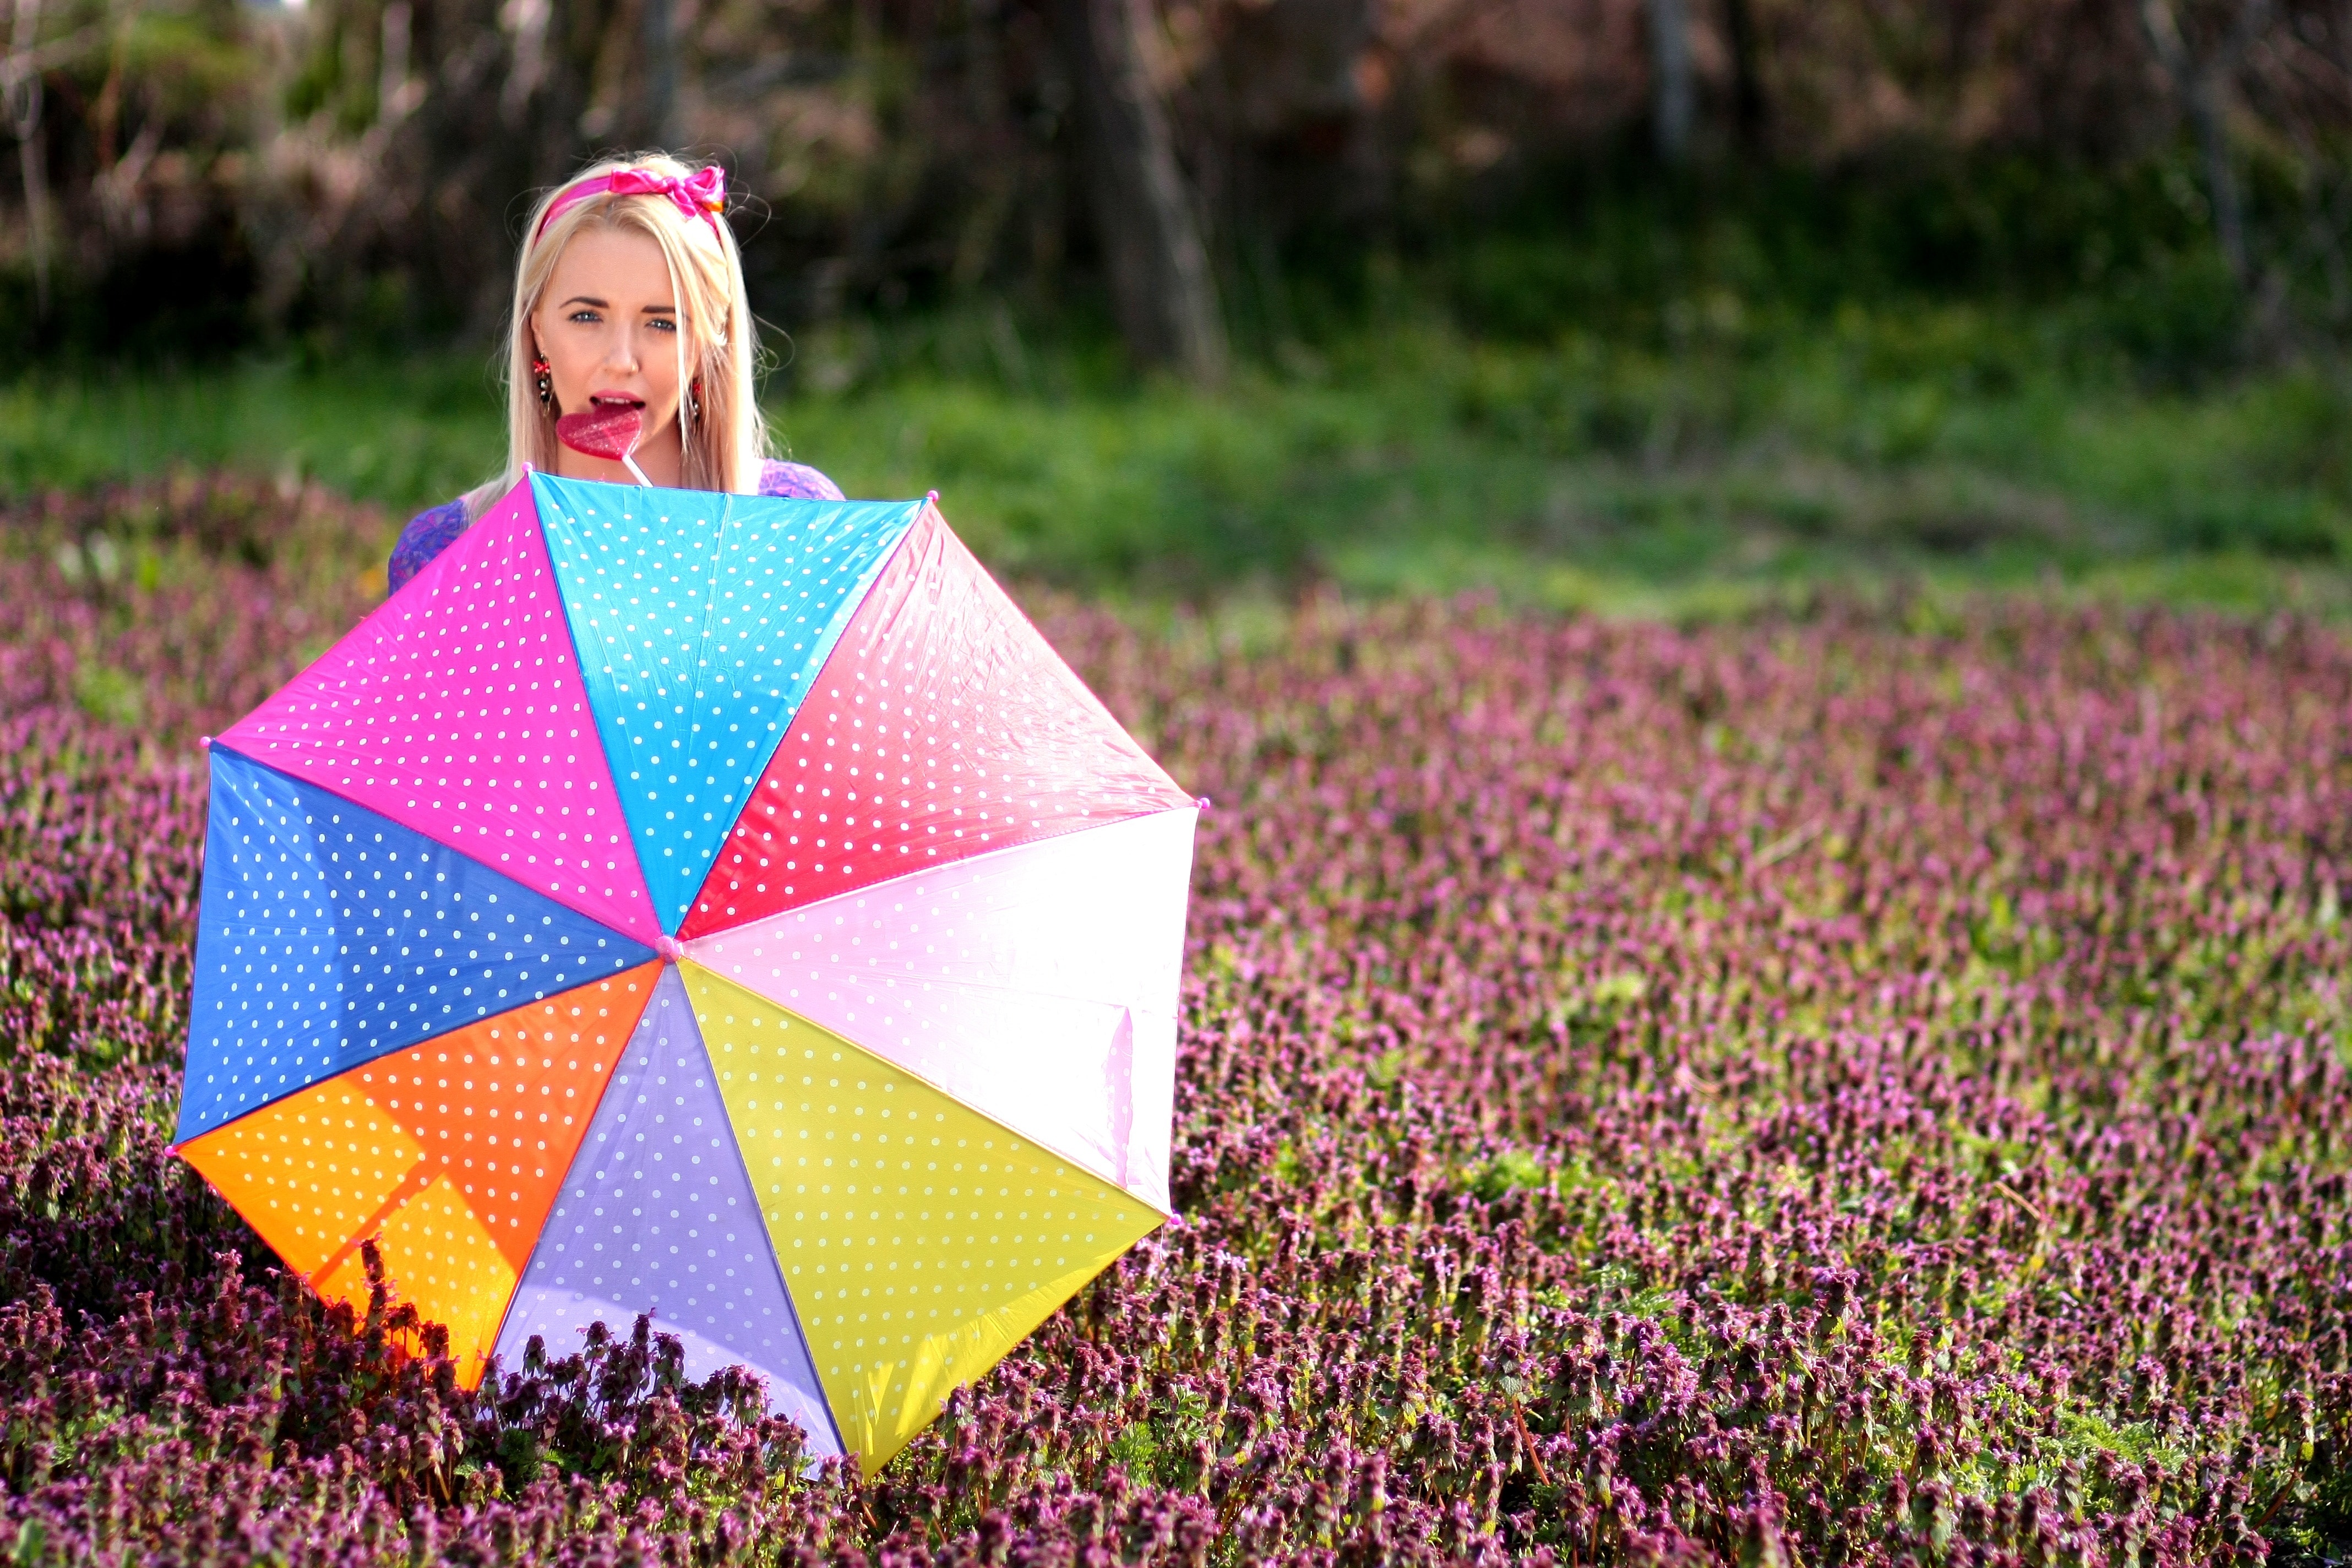 selective focus photography of woman in garden with umbrella